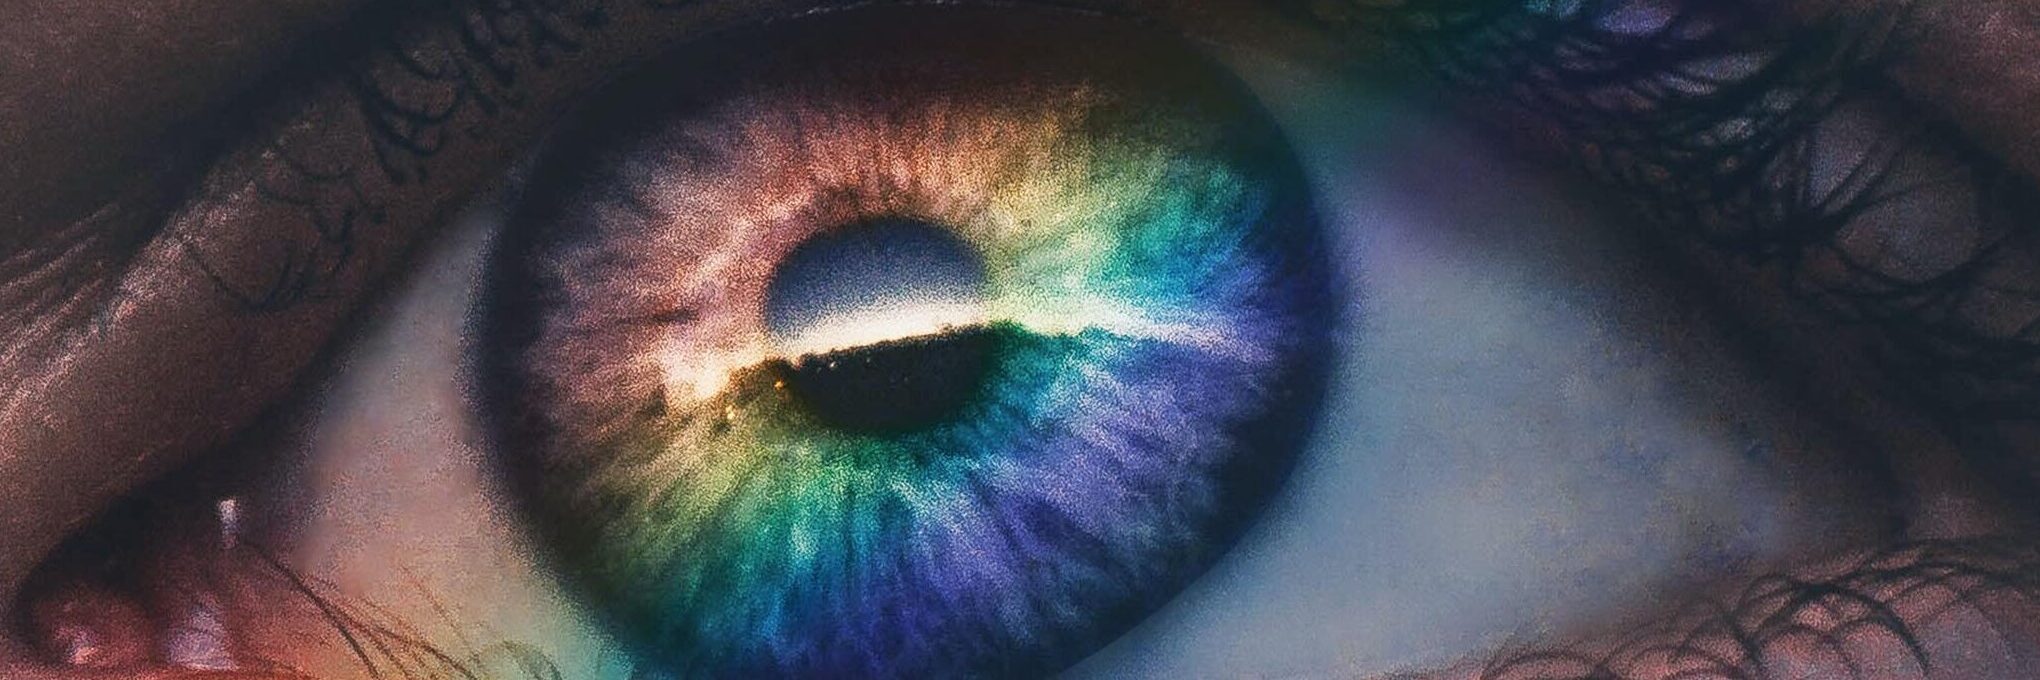 A rainbow reflection over the eye